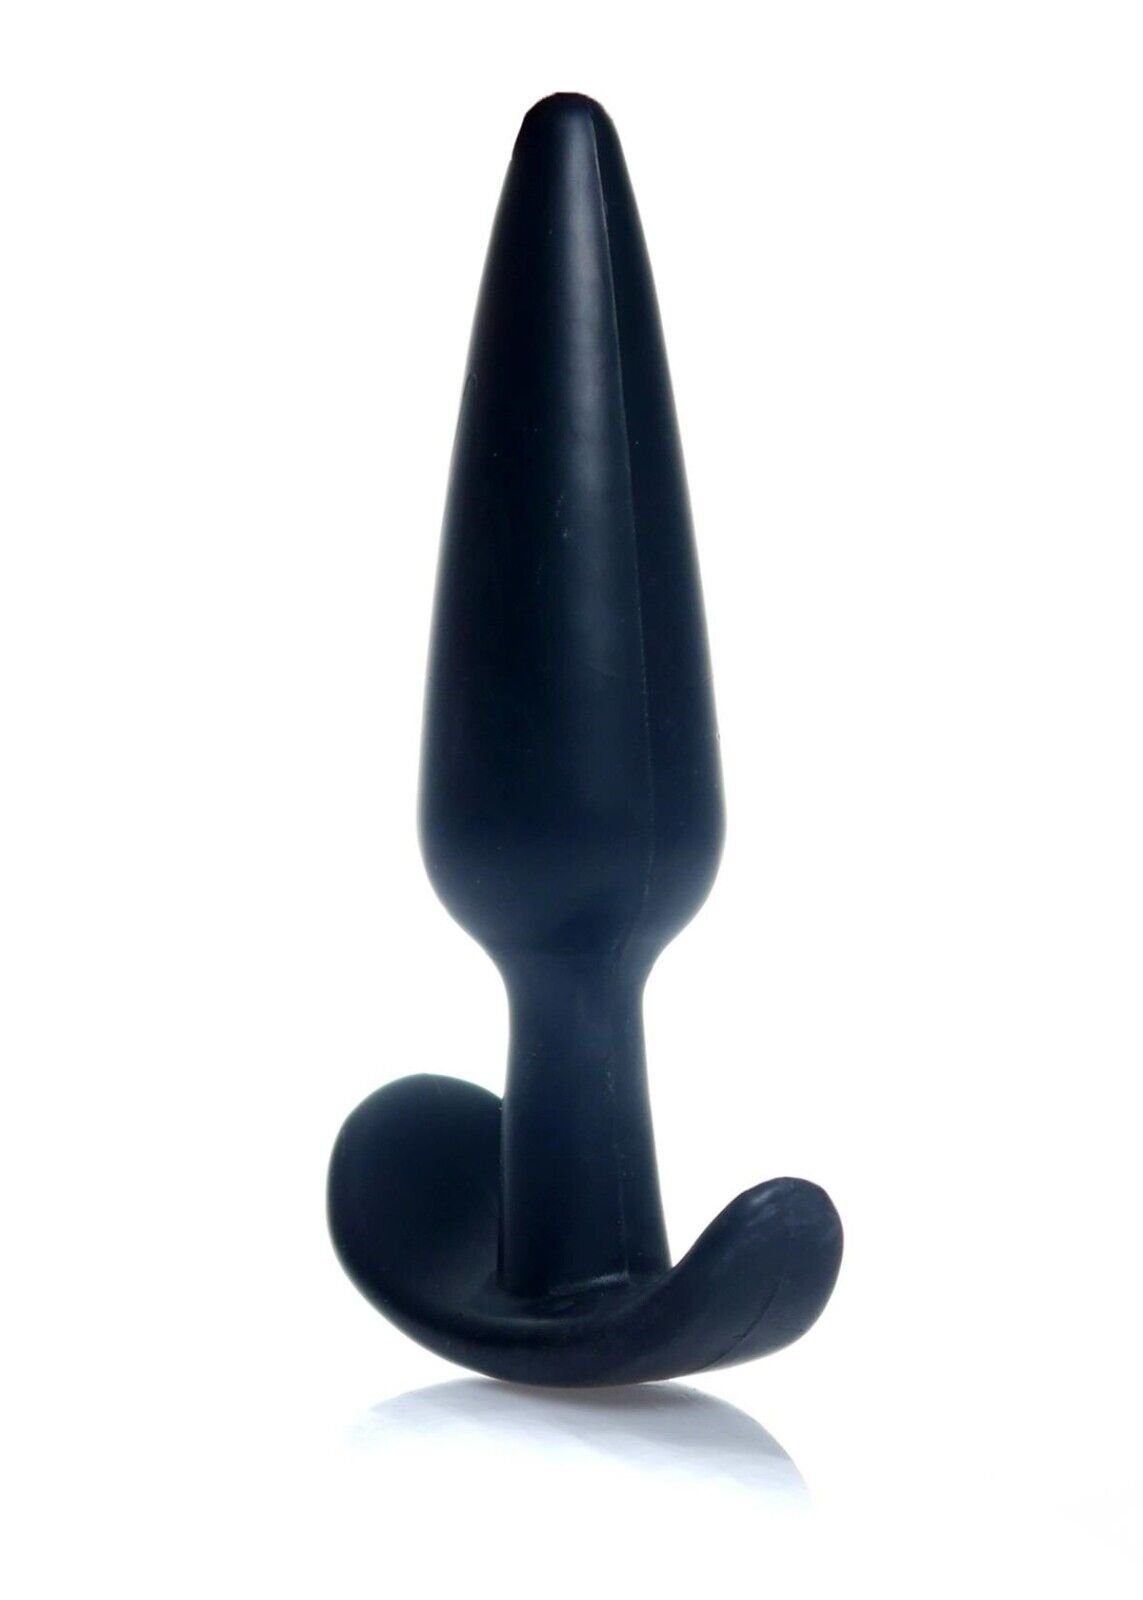 Plug 12cm Anal denu-shop Sexspielzeug Anal Analplug Stöpsel Weich T-Plug Lang